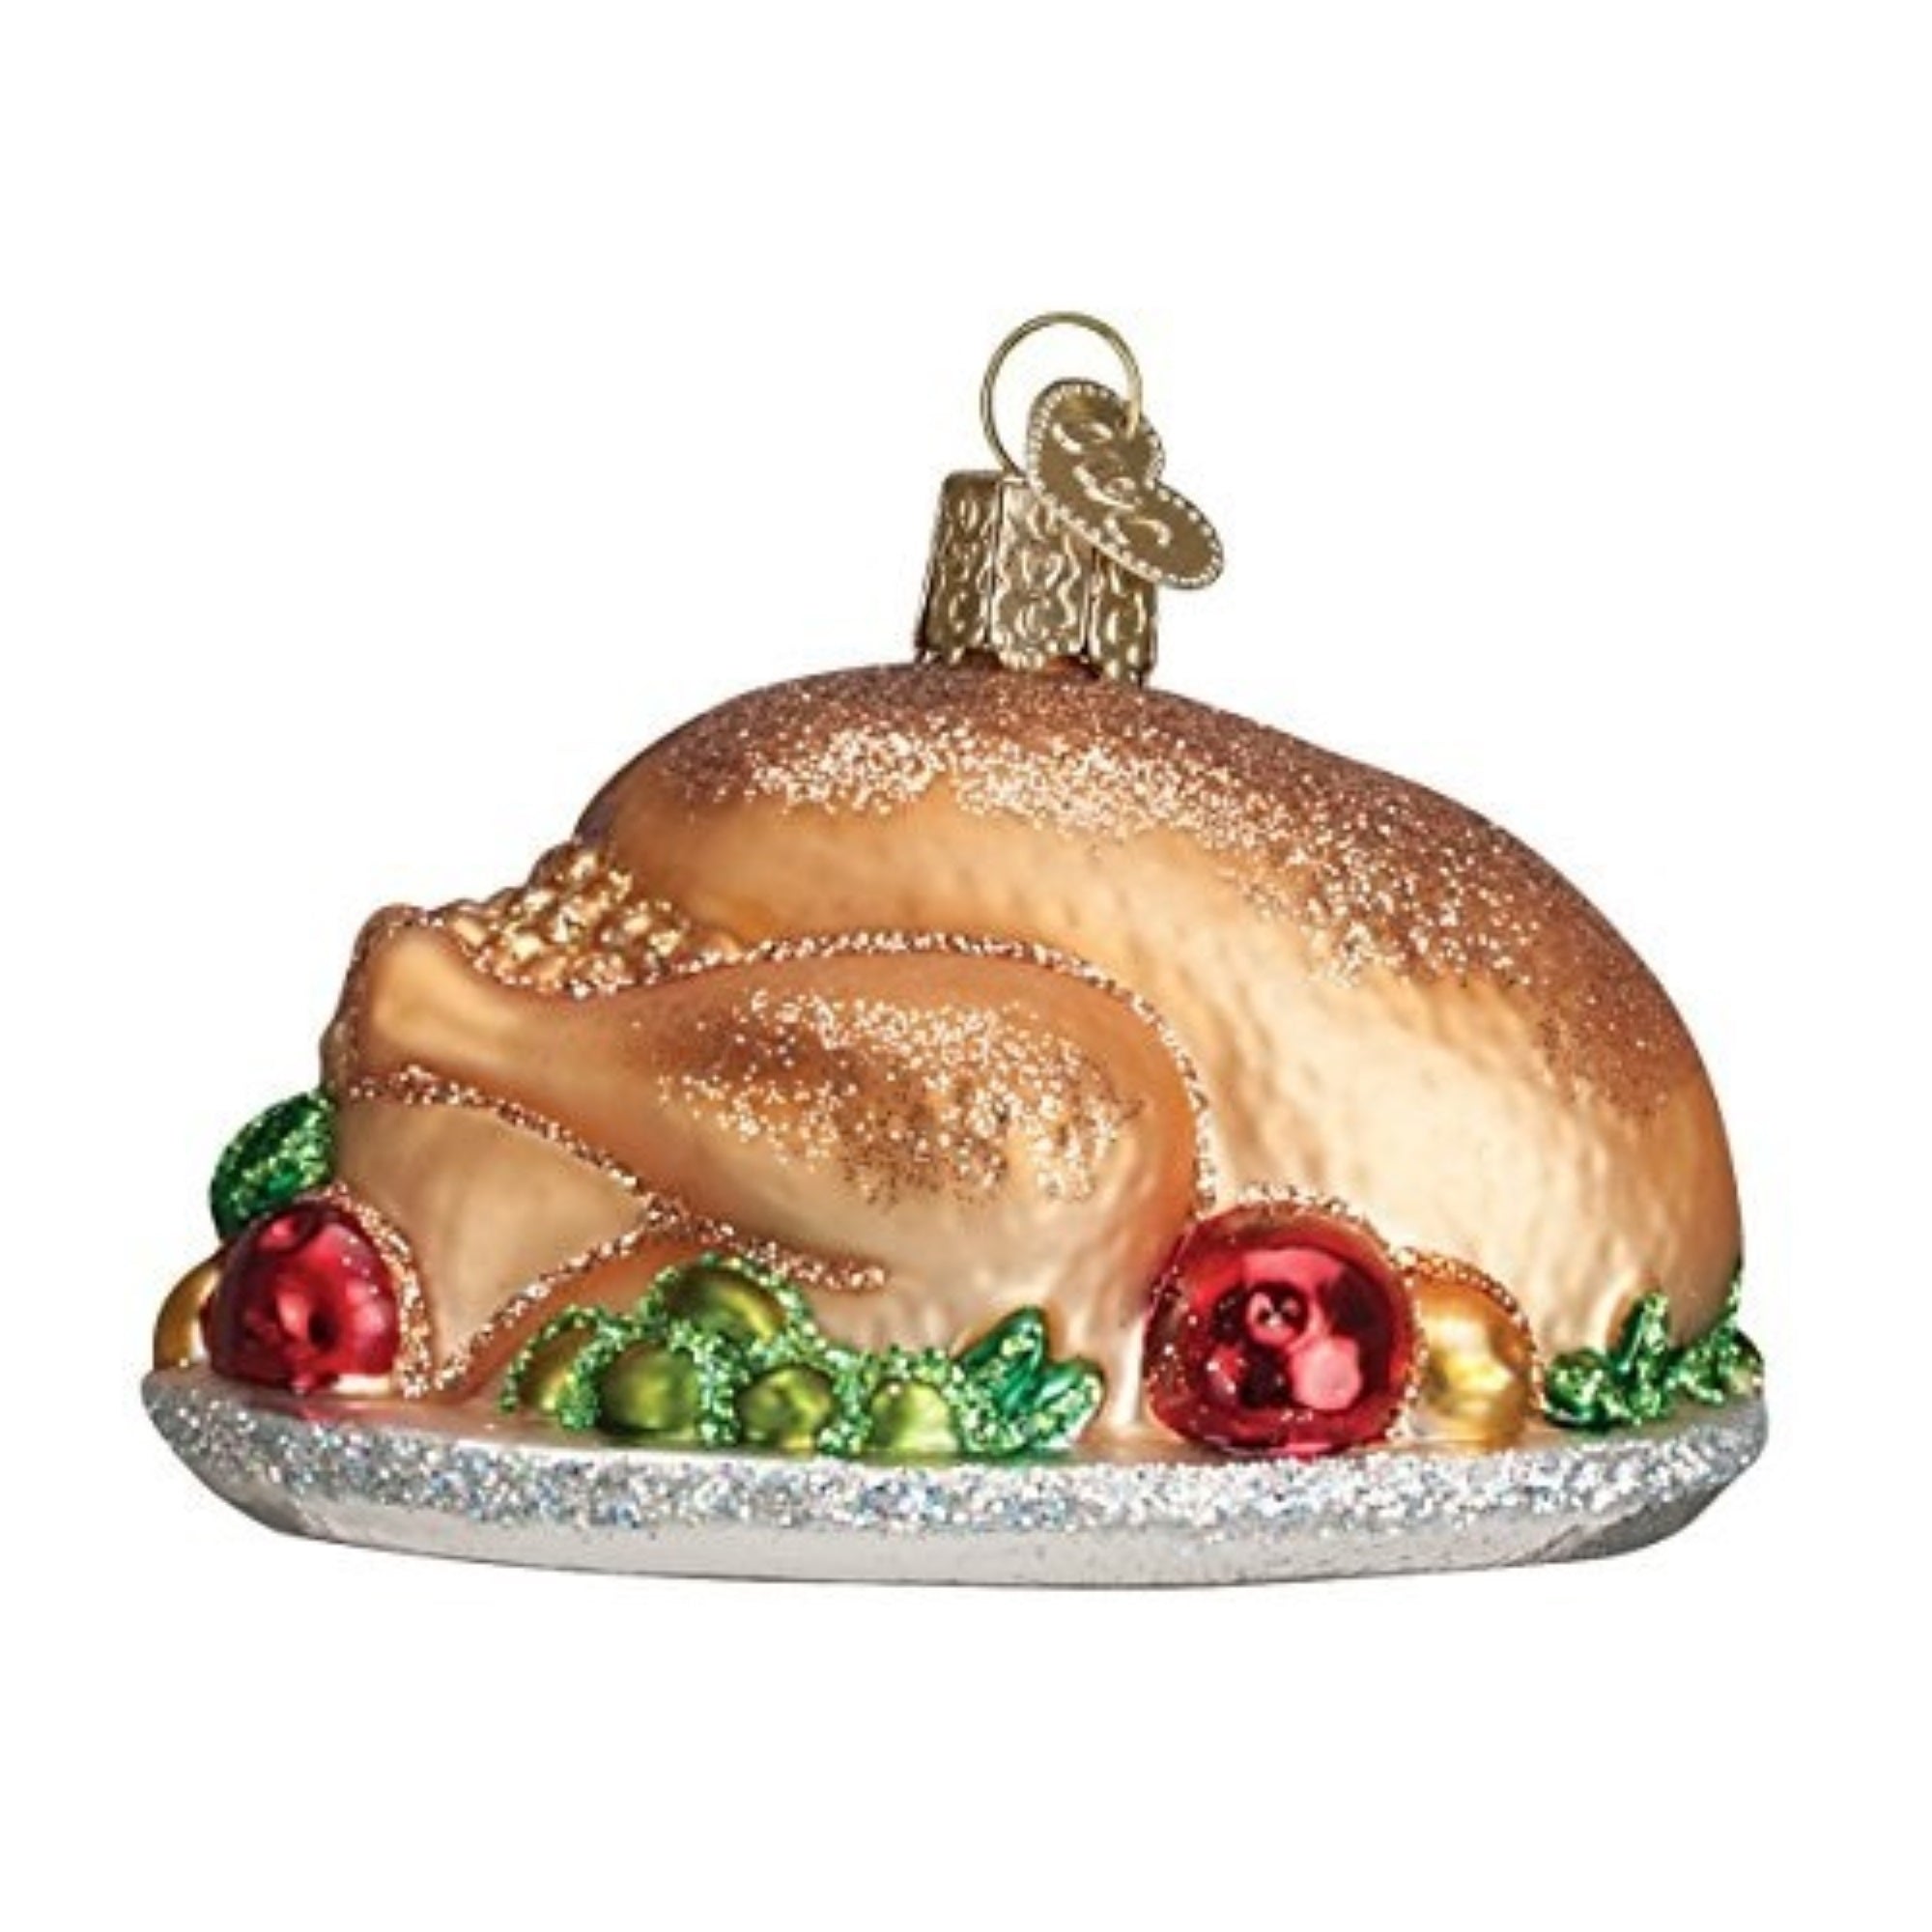 Old World Christmas Turkey Platter Glass Blown Ornament